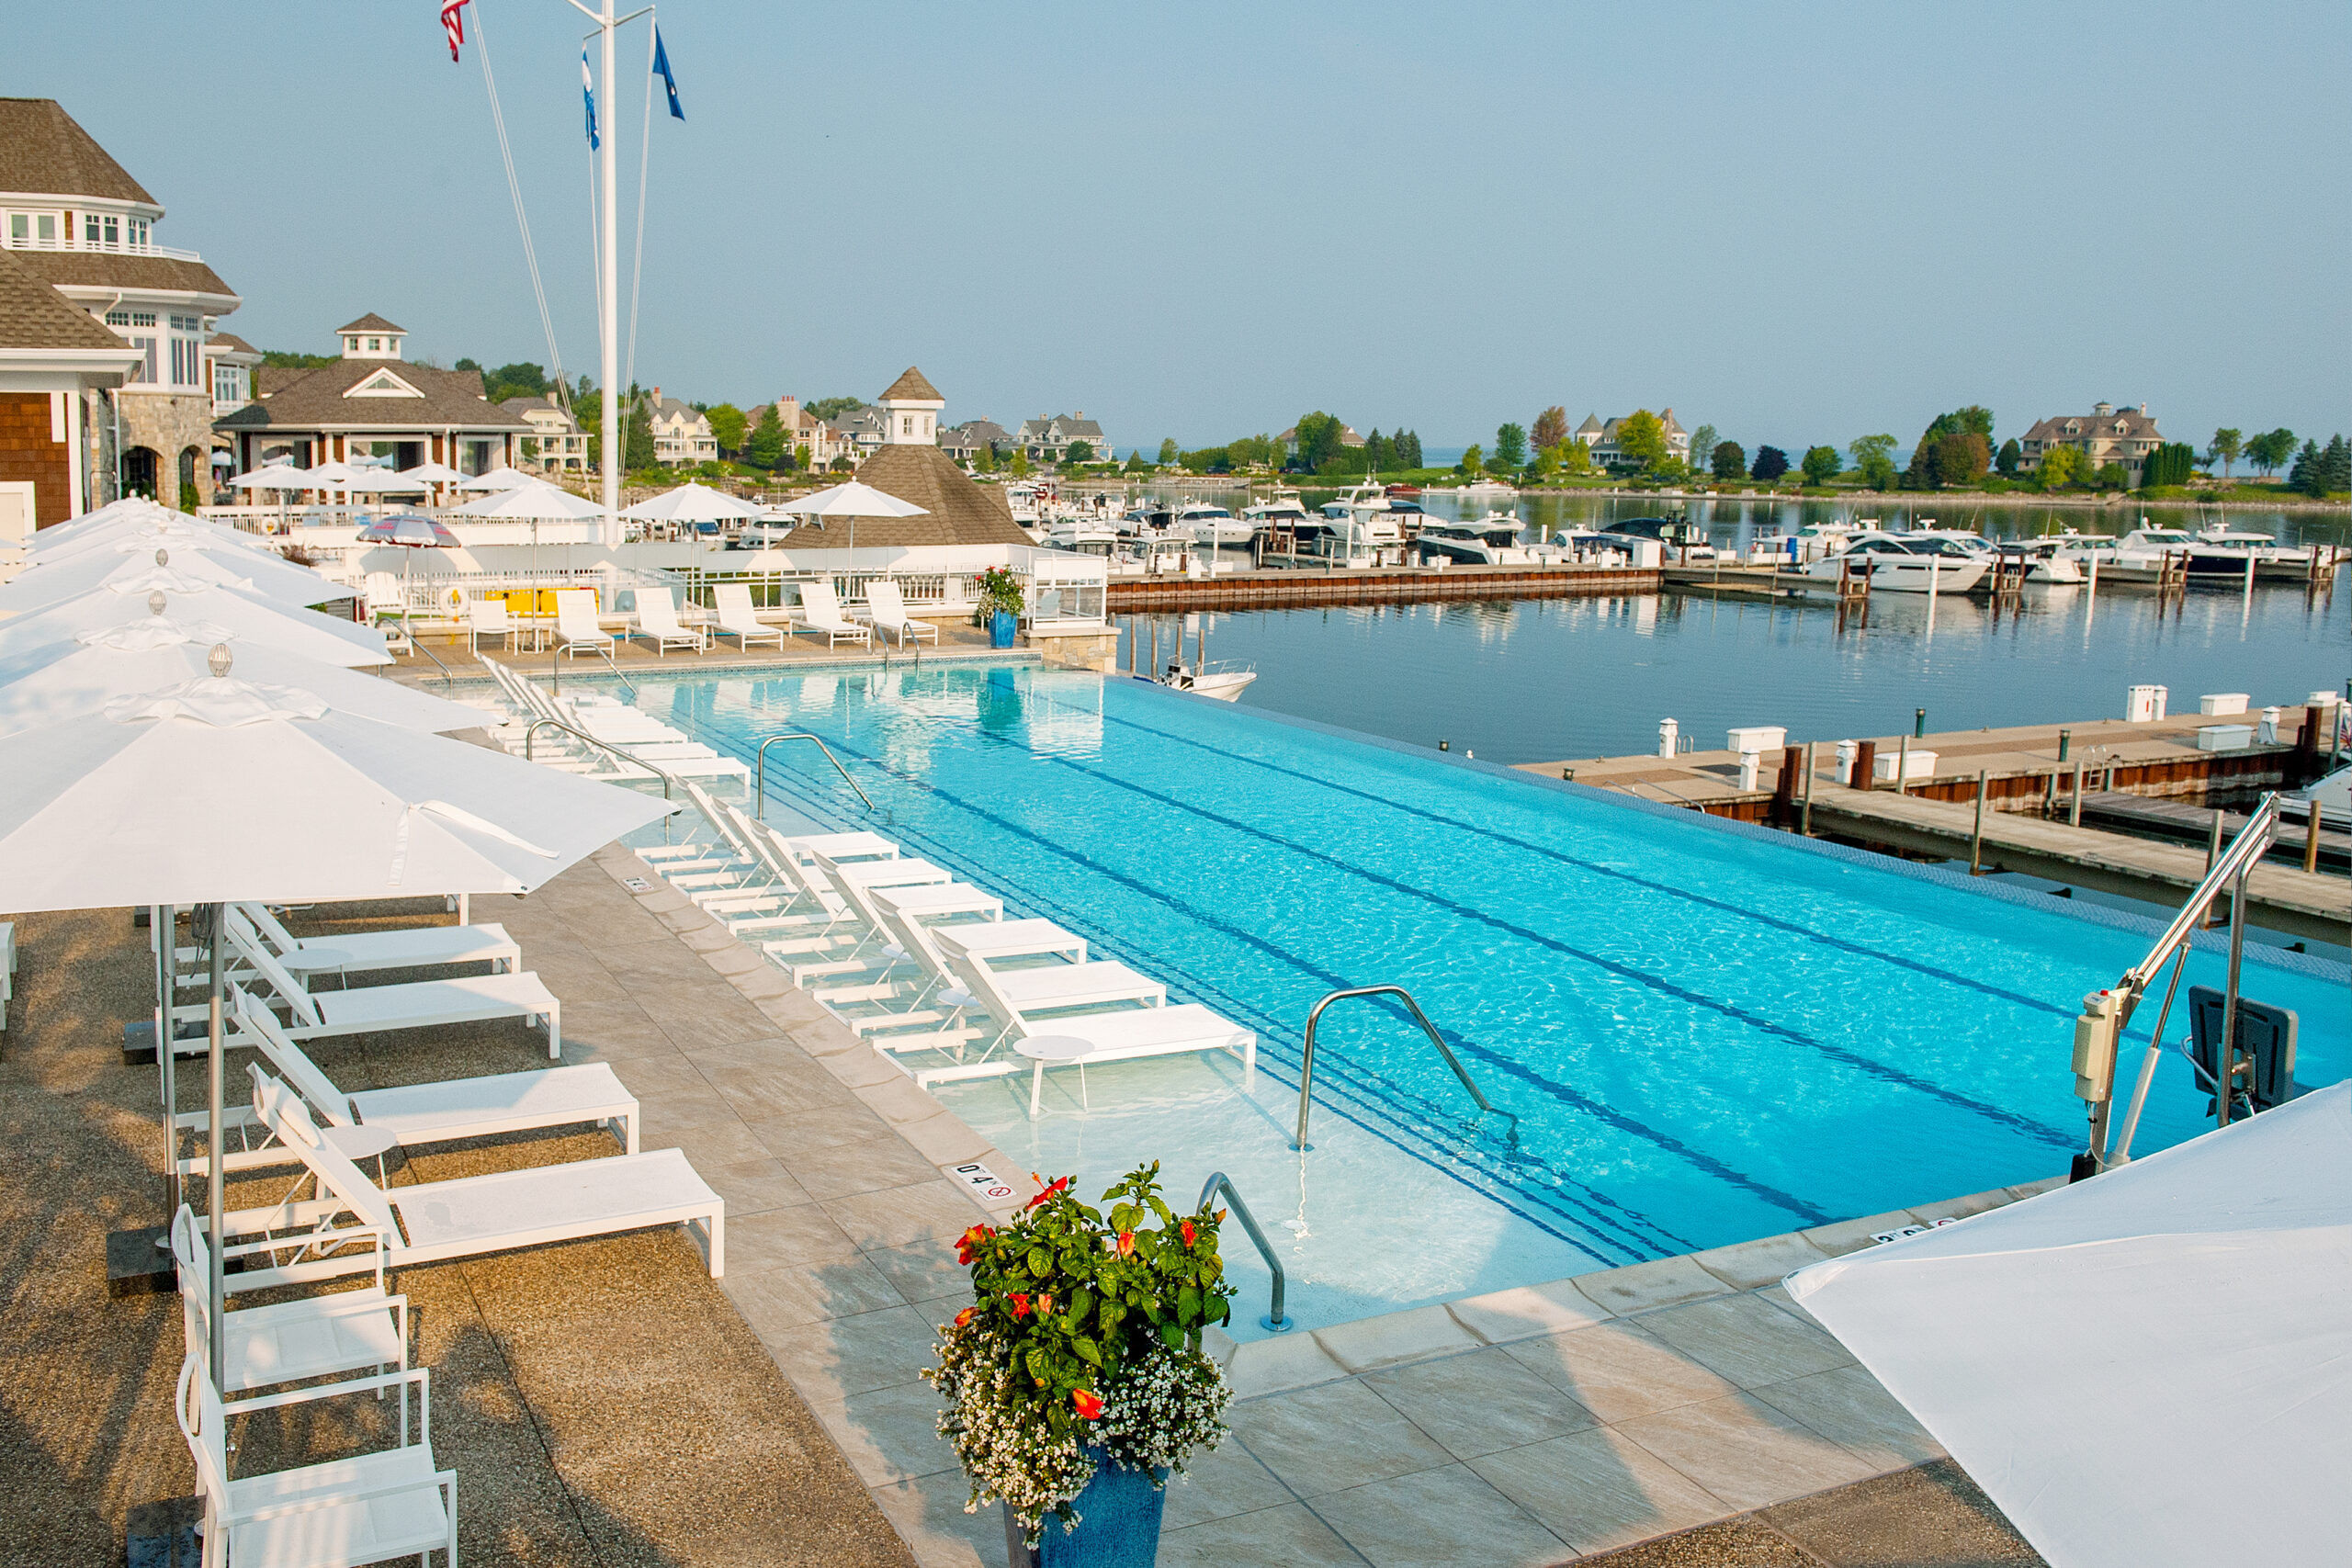 BHYC Among Top Ranked Private Club Aquatics & Pools